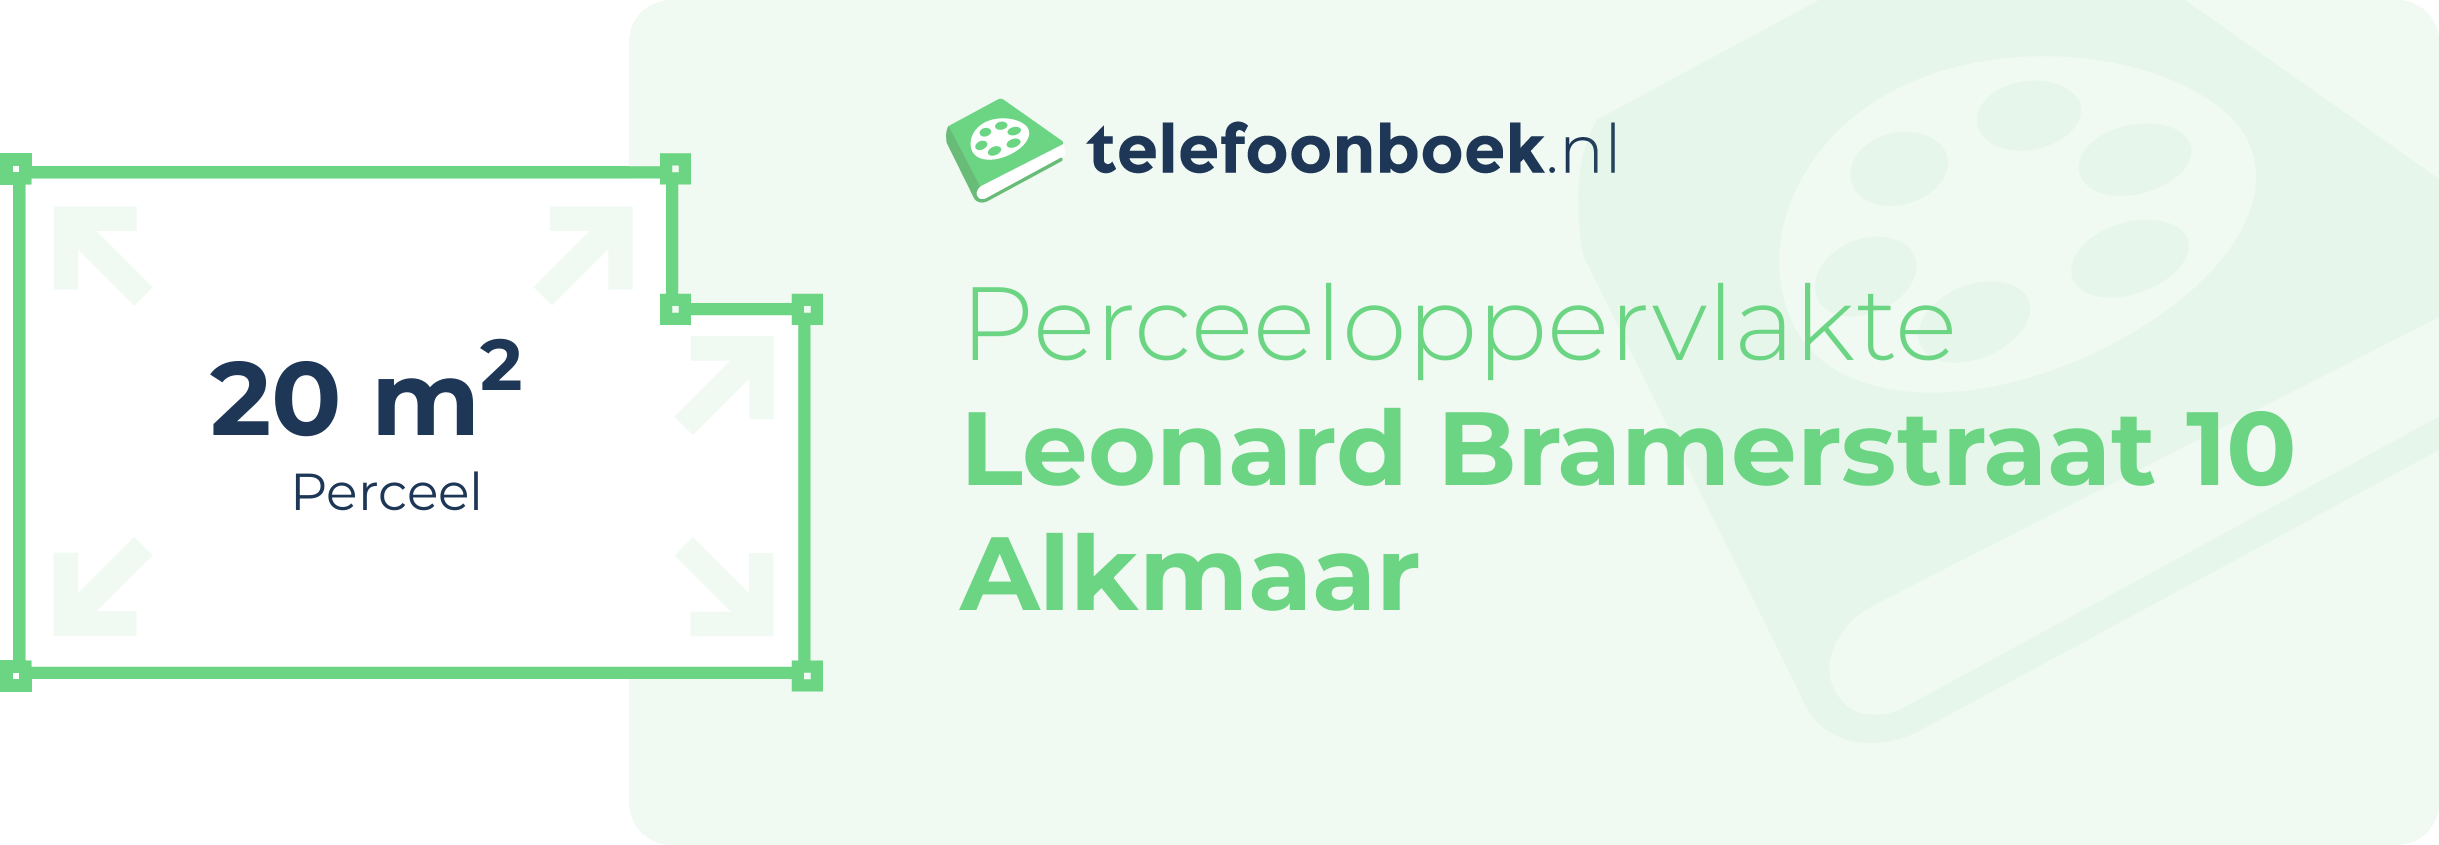 Perceeloppervlakte Leonard Bramerstraat 10 Alkmaar